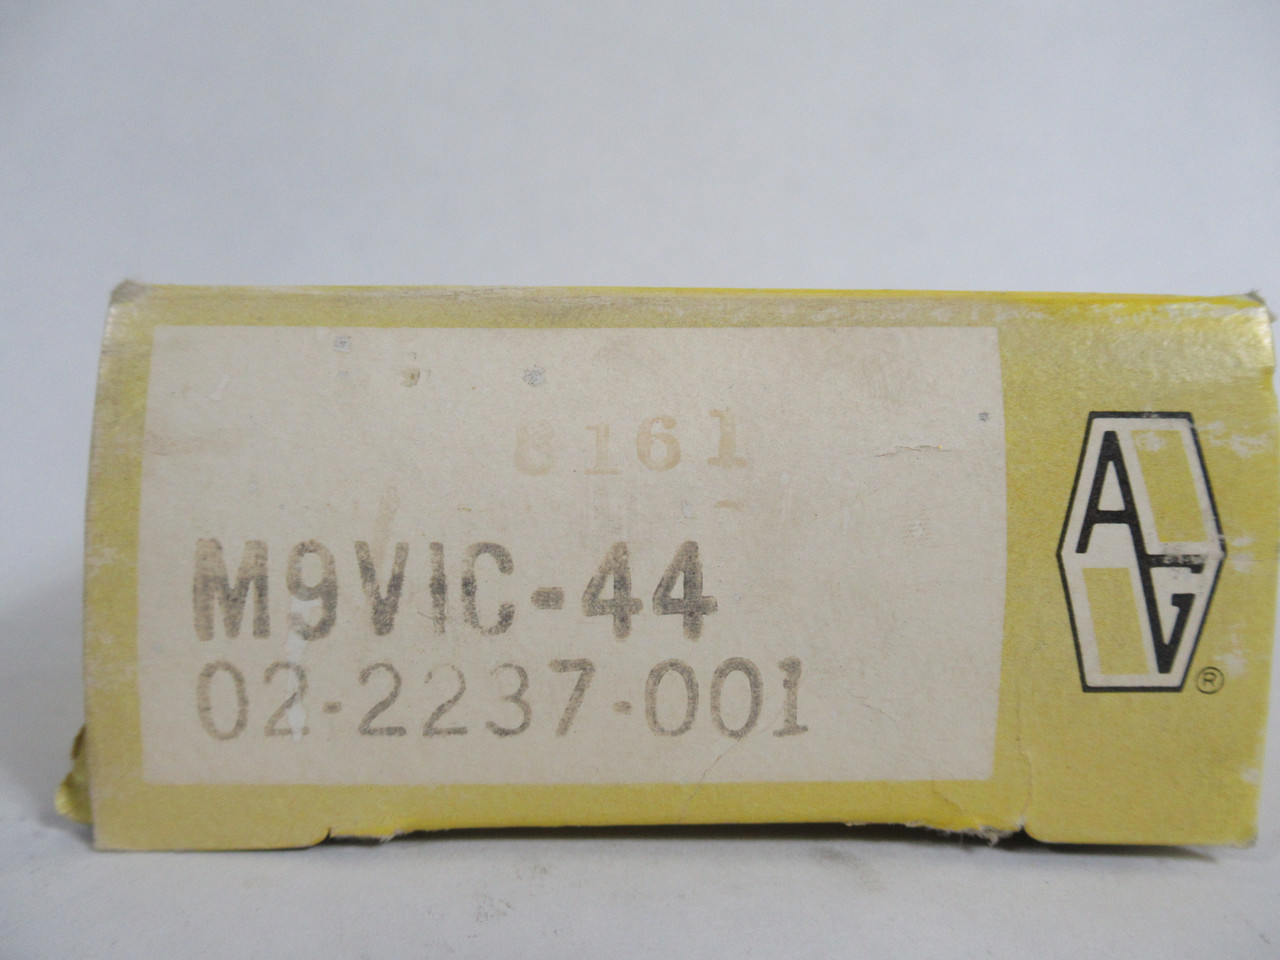 AGCO M9VIC-44-022237-001 Block&Bleed Gauge Valve 6000PSI@200F DAMAGED BOX NEW